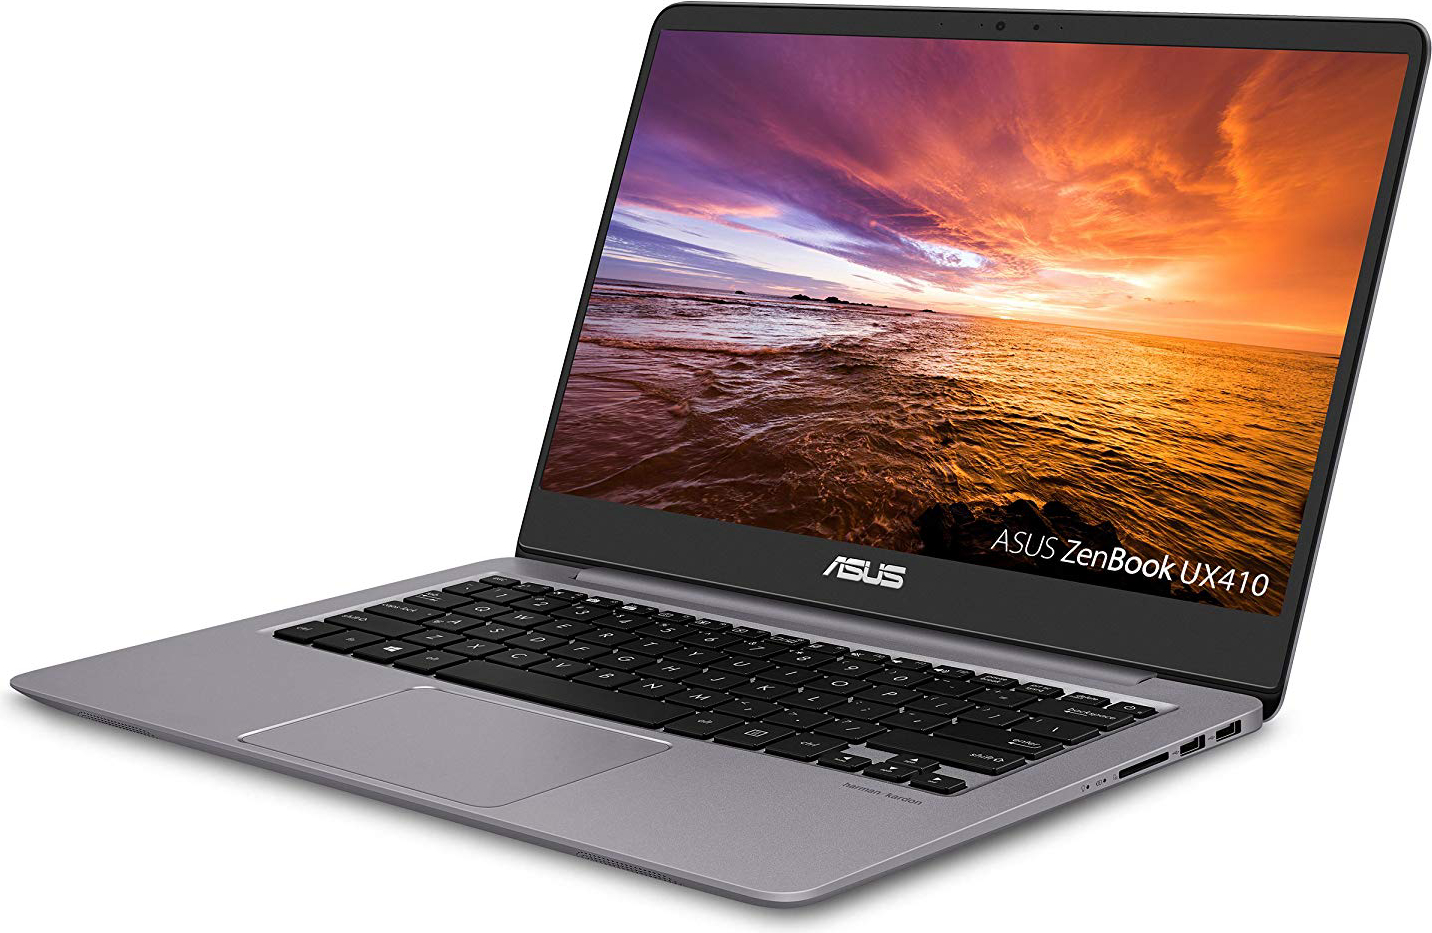 ASUS ZenBook Ultra-Slim Laptop - 14” FHD IPS WideView Display, Intel Core i7-8550U CPU, 8GB DDR4, 128GB SSD + 1TB HDD, Windows 10, Backlit keyboard, 3.1lbs, Quartz Grey - UX410UA-AS74